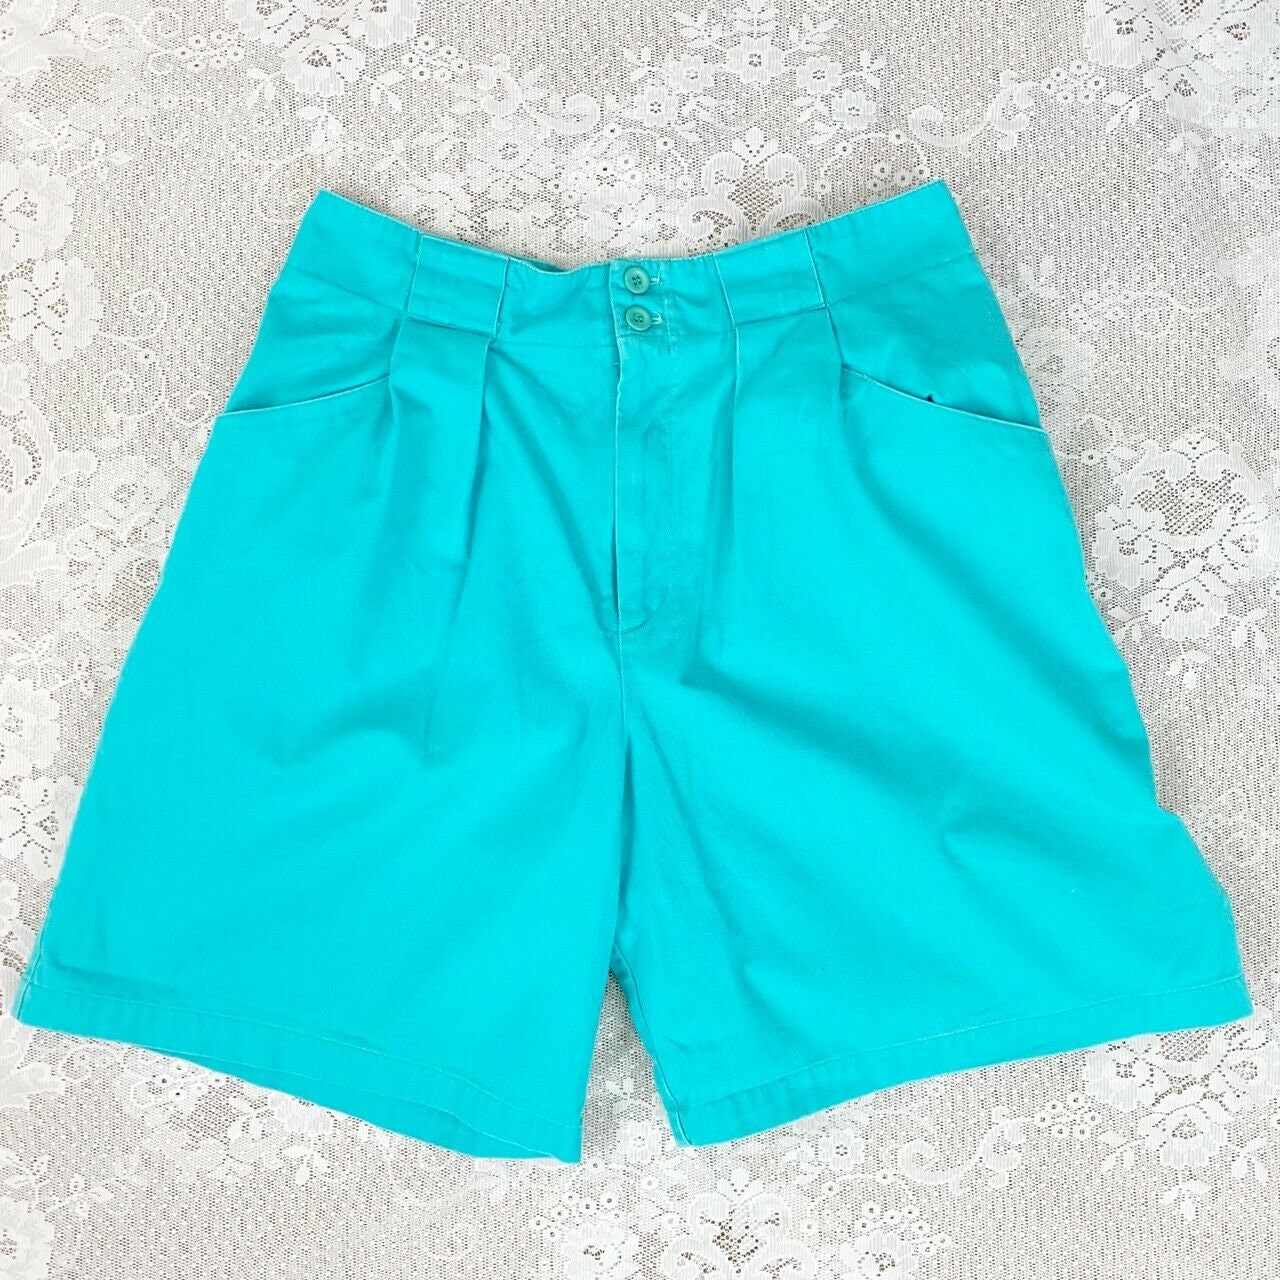 80s Light Blue Turquoise Shorts Vintage Trouser Shorts Chinos | Etsy